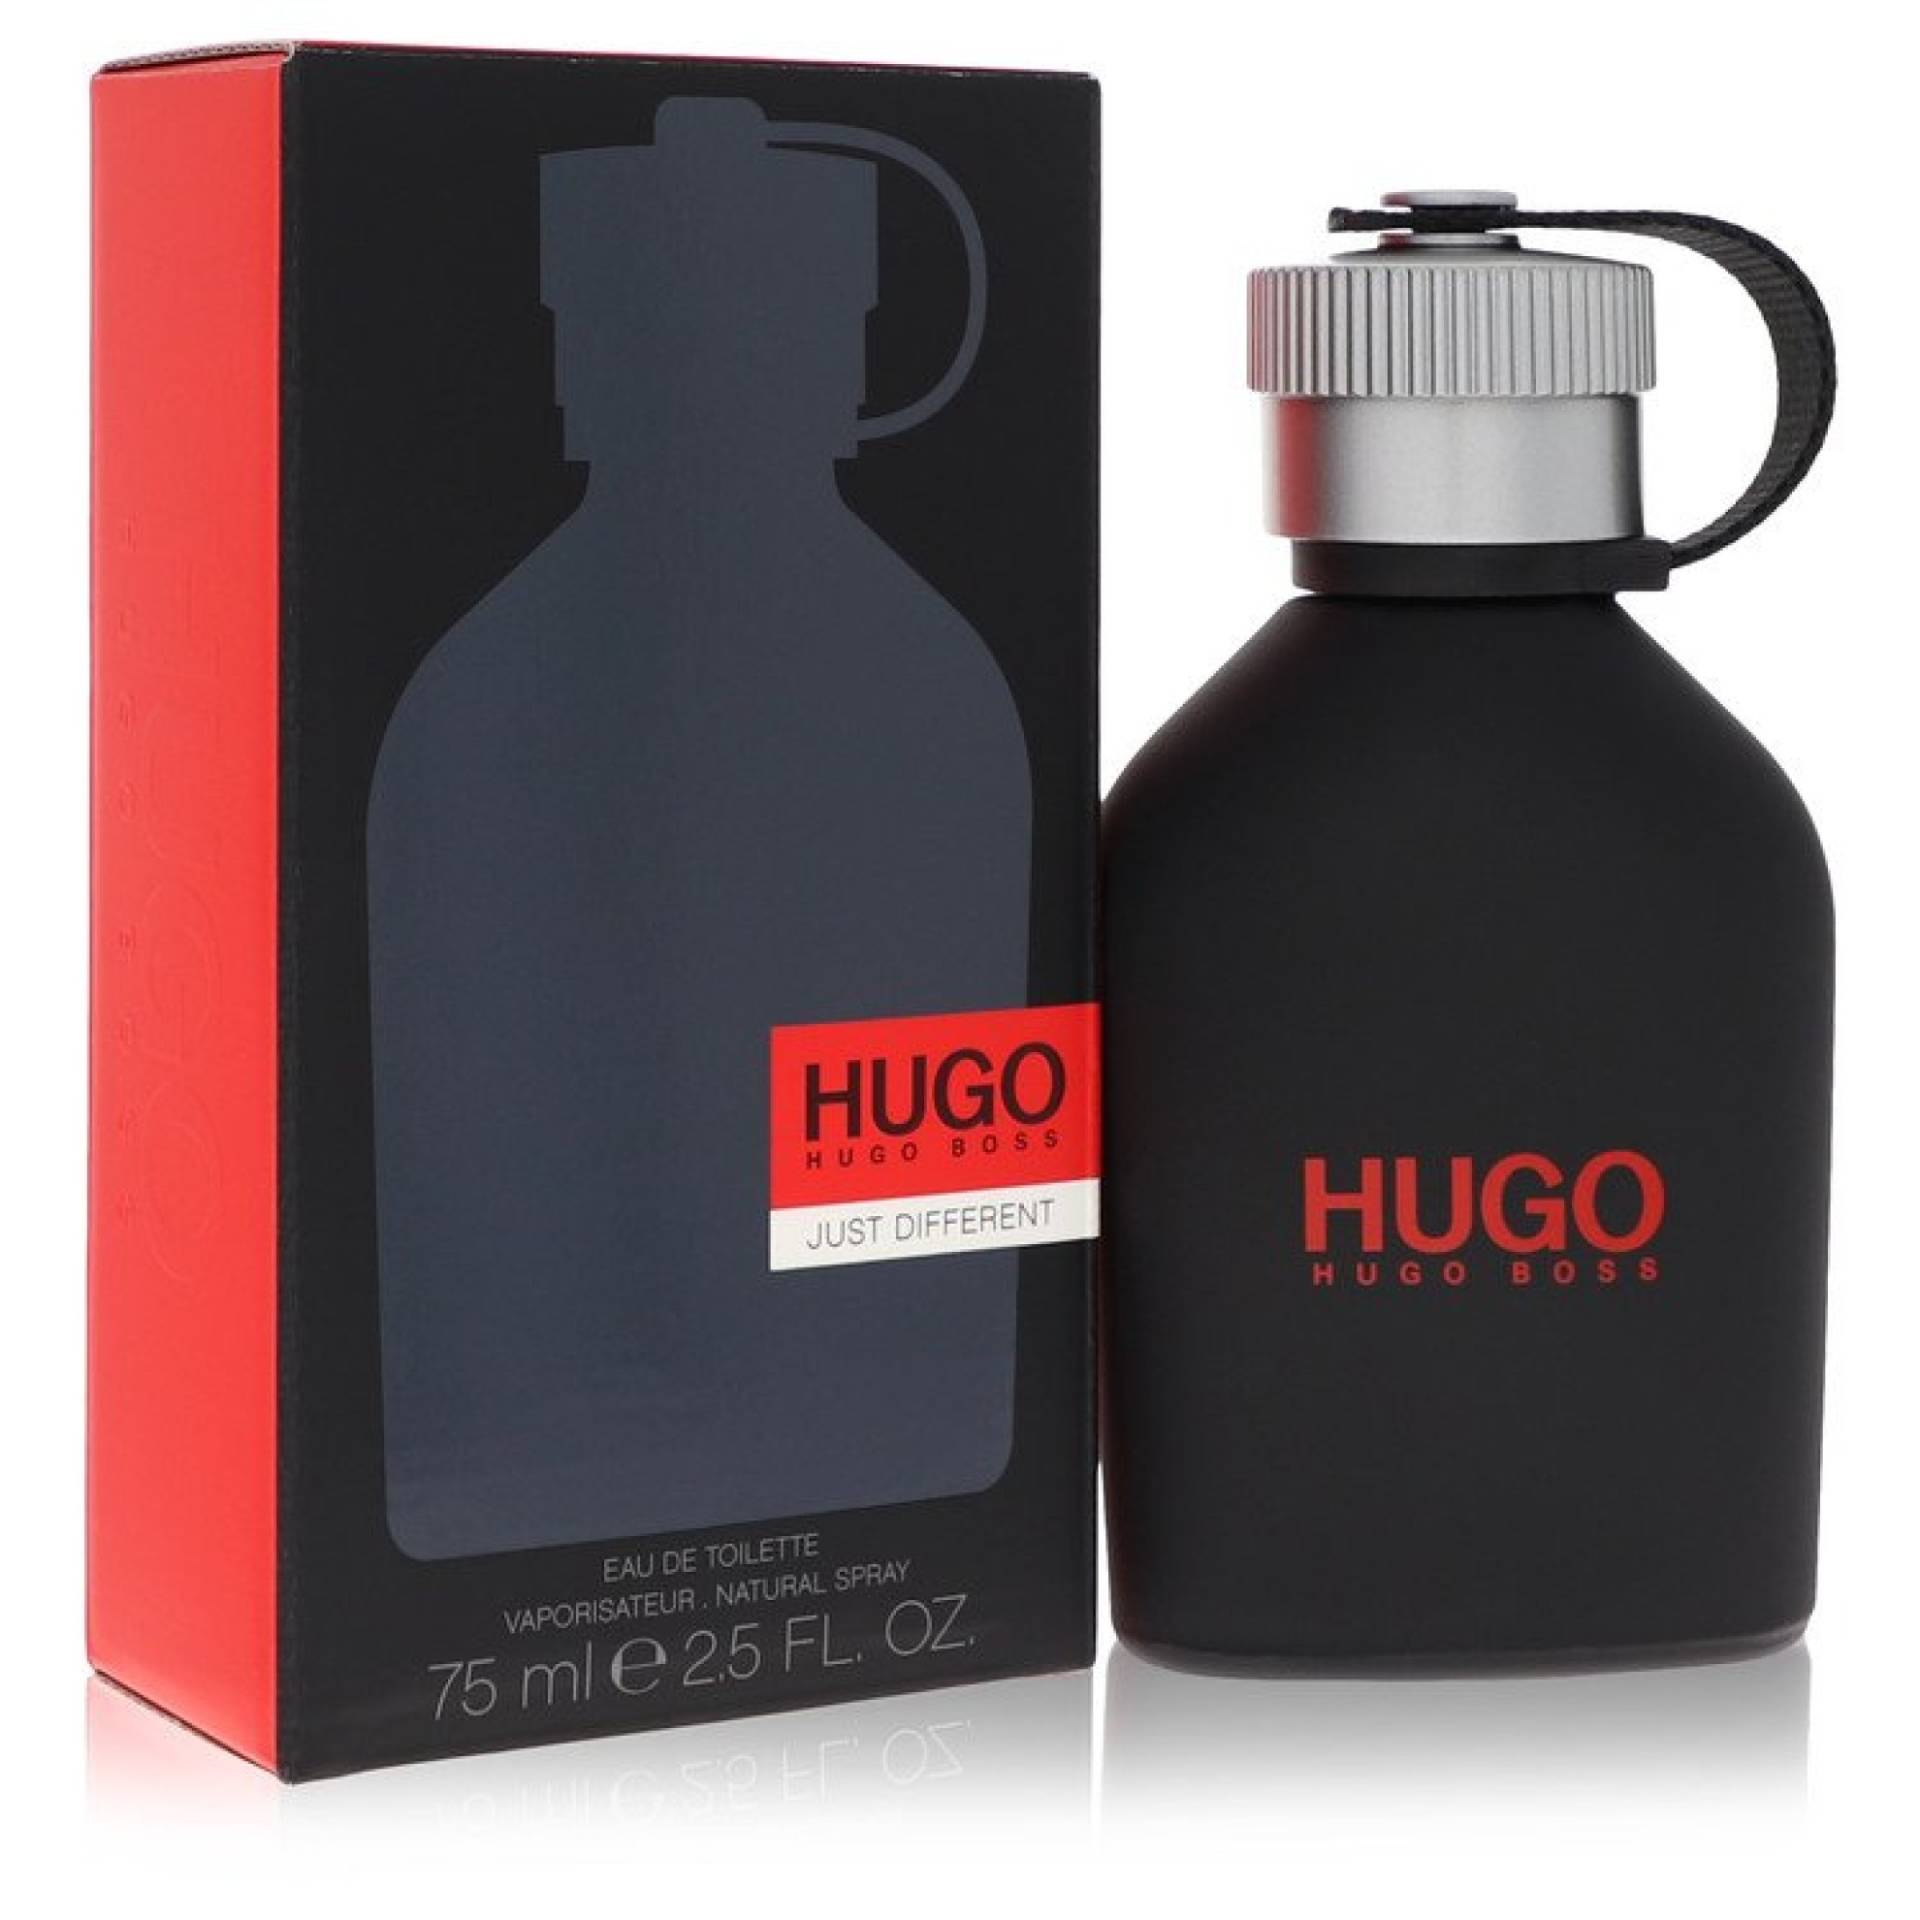 Hugo Boss Hugo Just Different Eau De Toilette Spray 75 ml von Hugo Boss